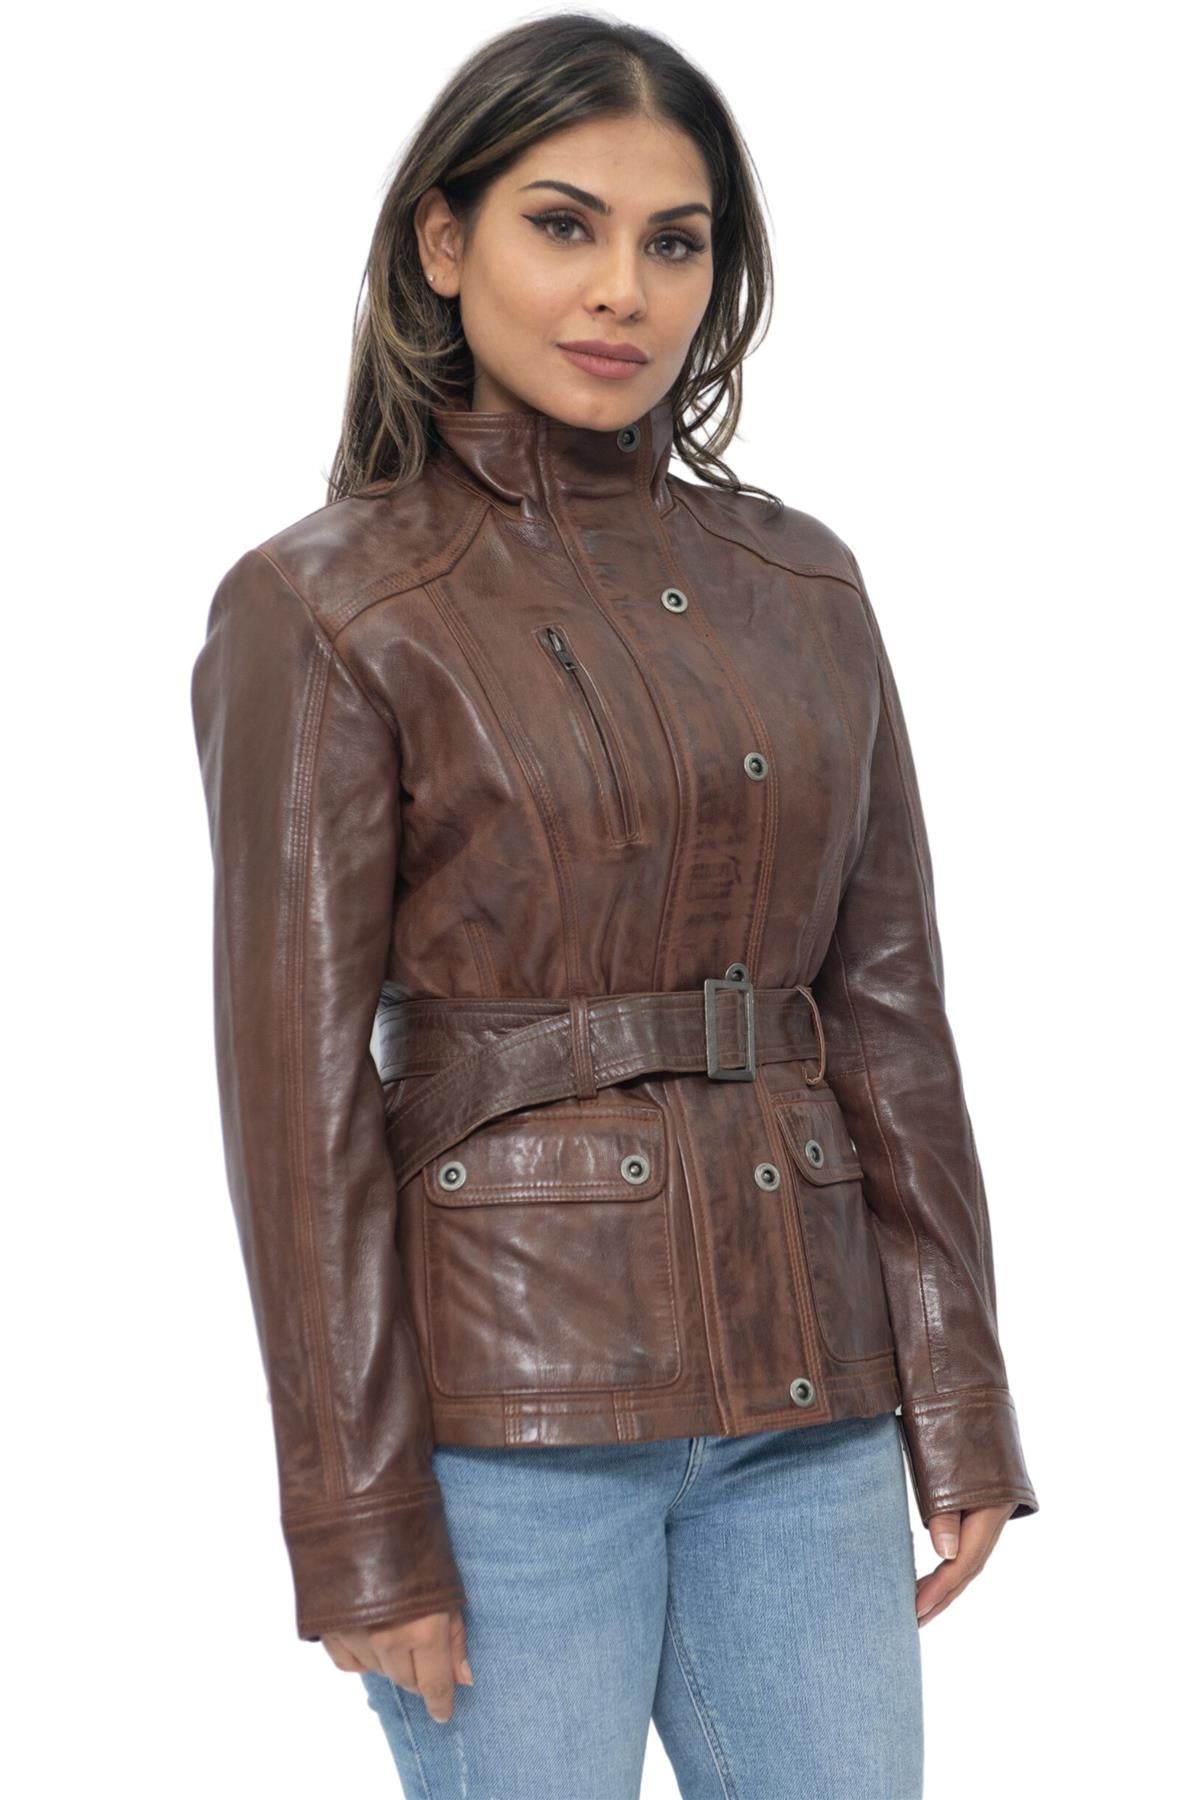 Womens Military Style Leather Biker Jacket-Phoenix